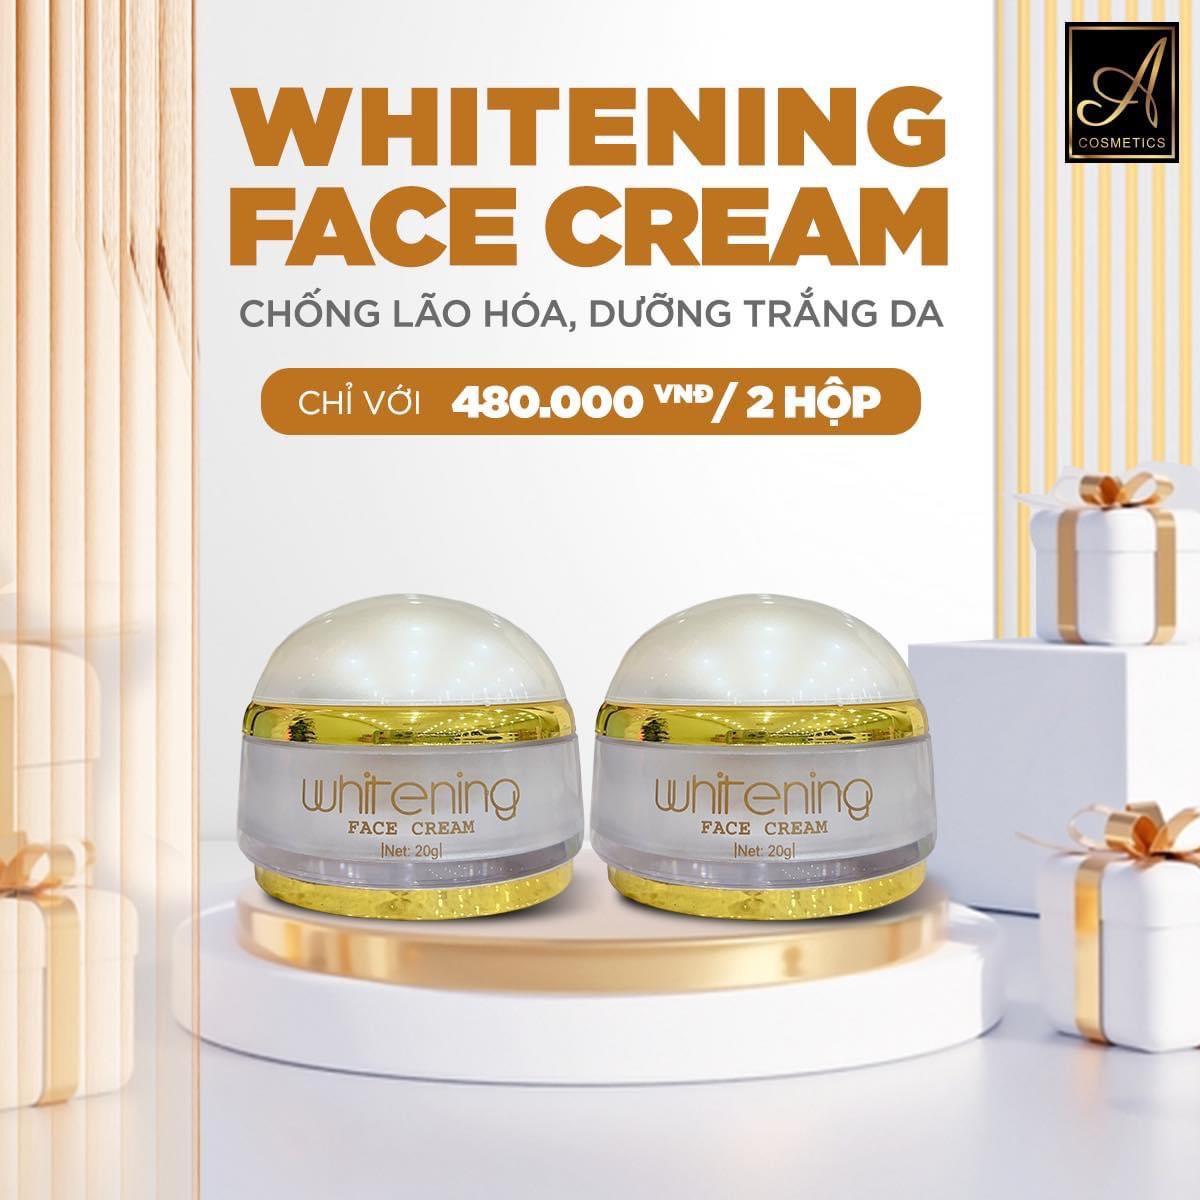 Whitening Face Cream